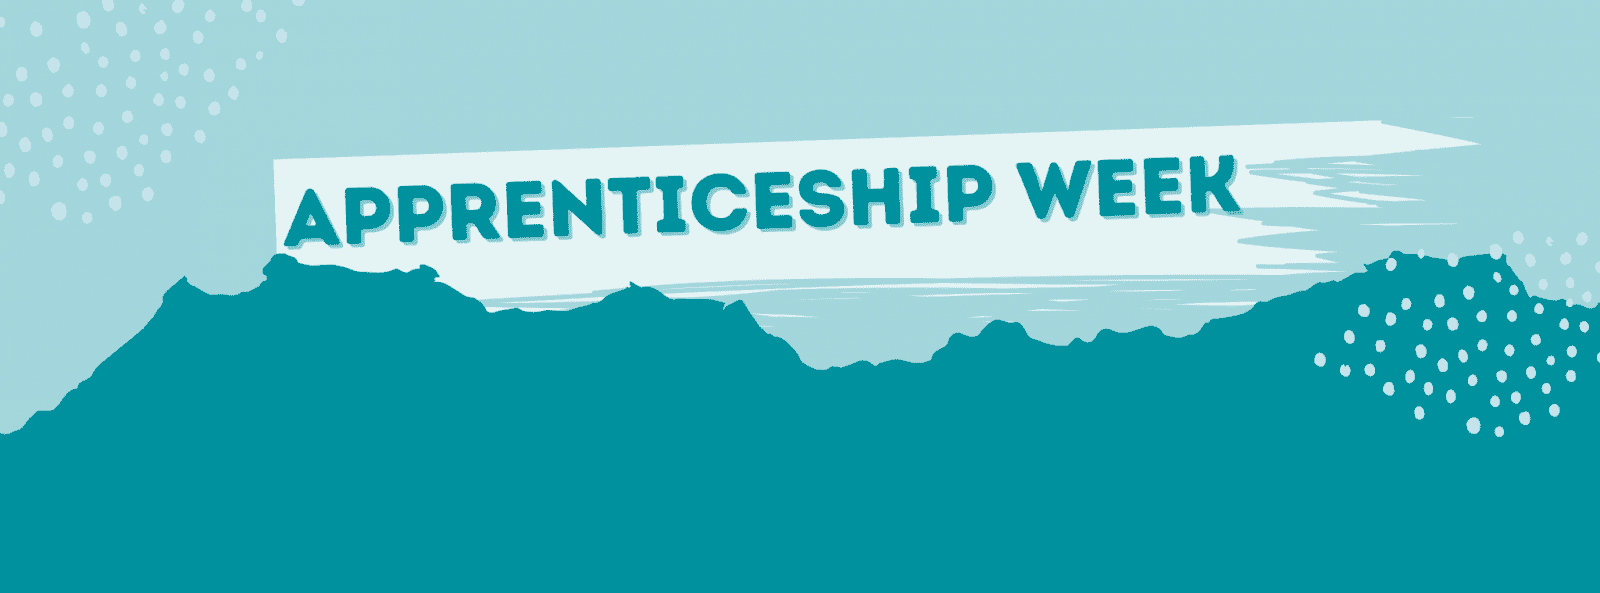 National apprenticeship week website banner - care and support apprenticeship